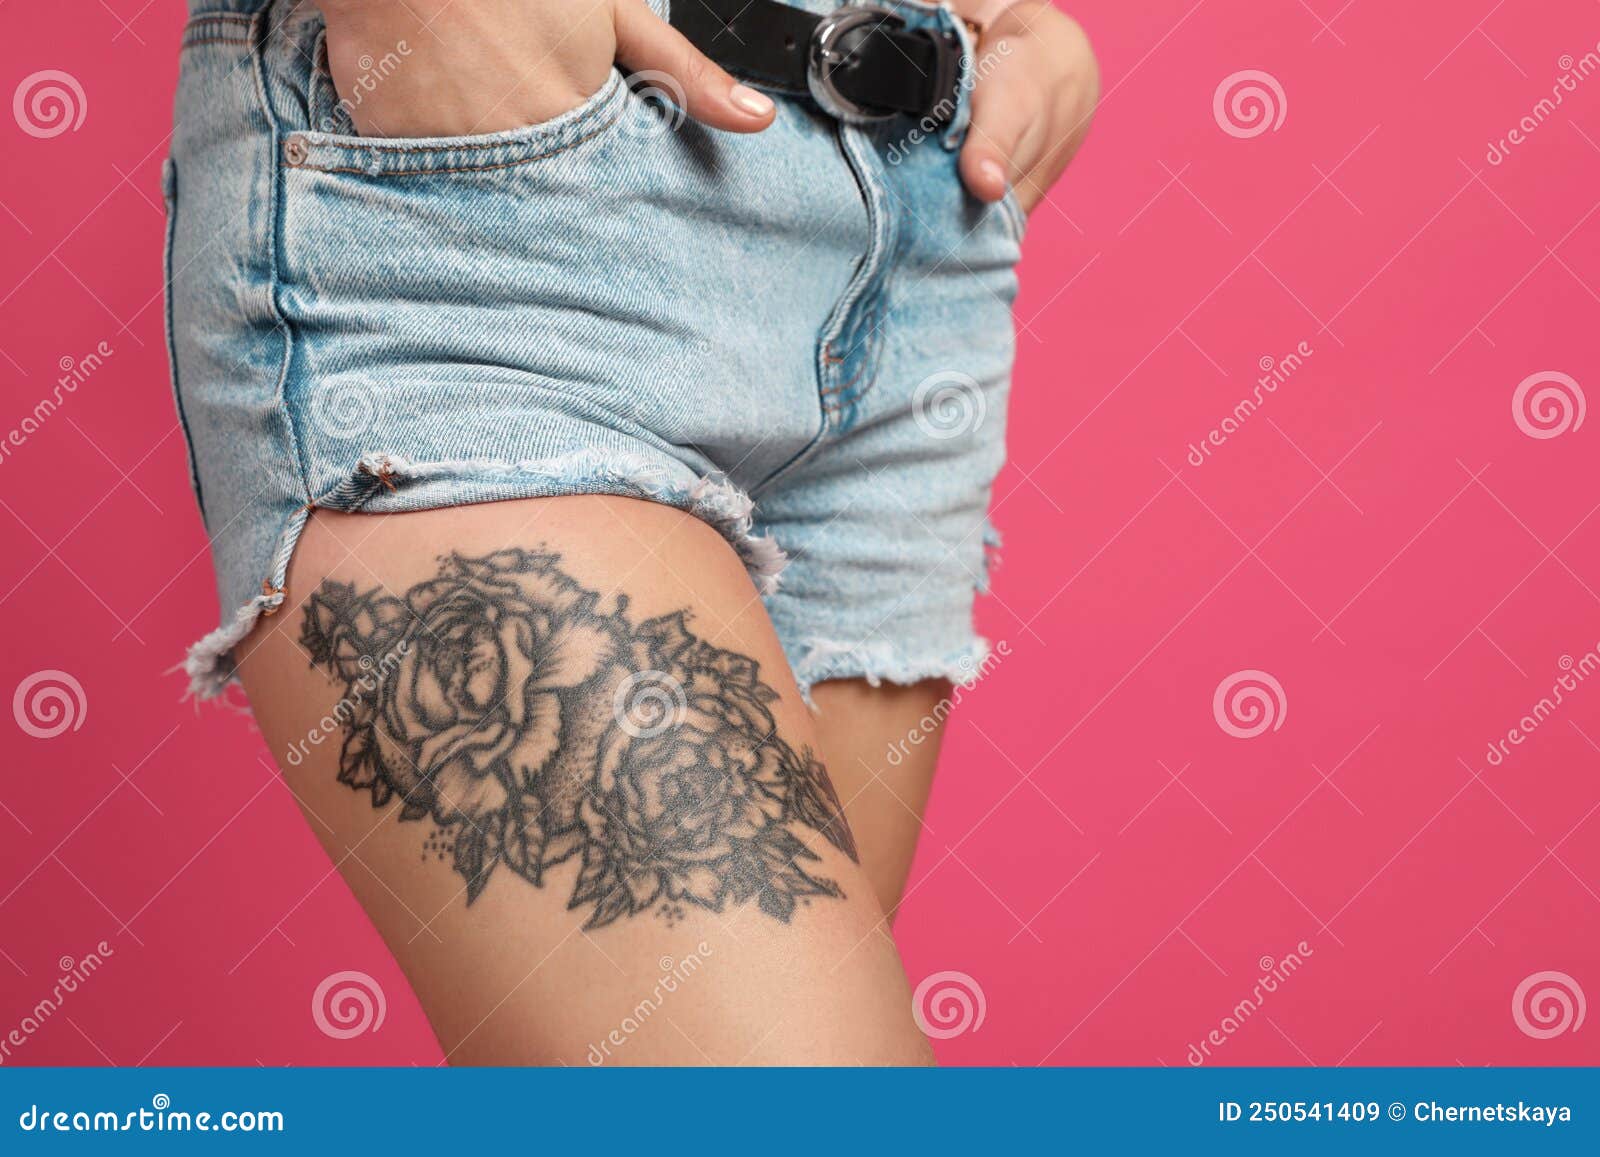 Tat2X Ink Armor Full Leg Tattoo Cover Up Sleeve - No Slip Gripper - U.S.  Made - Pink - ML (Single Leg Tattoo Cover up Sleeve) -